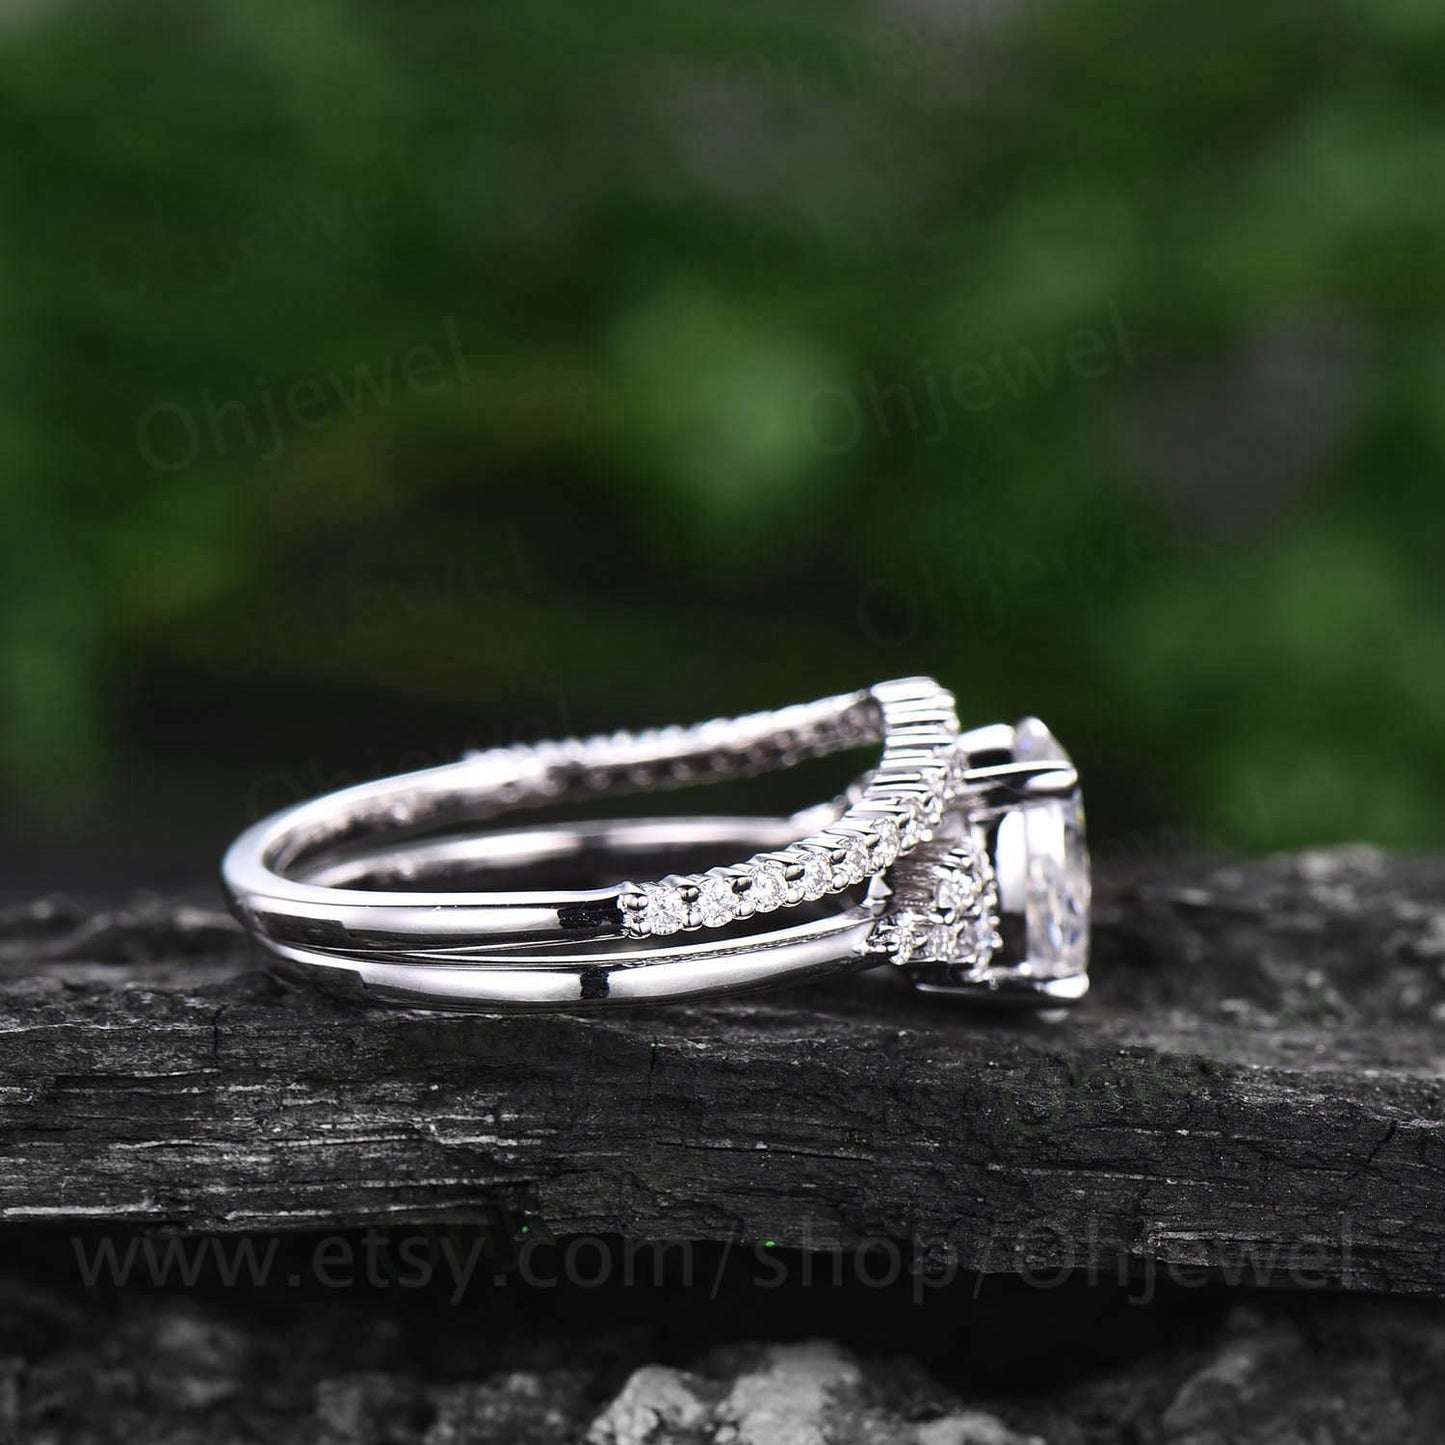 Vintage oval cut moissanite engagement ring set white gold alternative  unique snowdrift engagement ring diamond bridal ring set for women